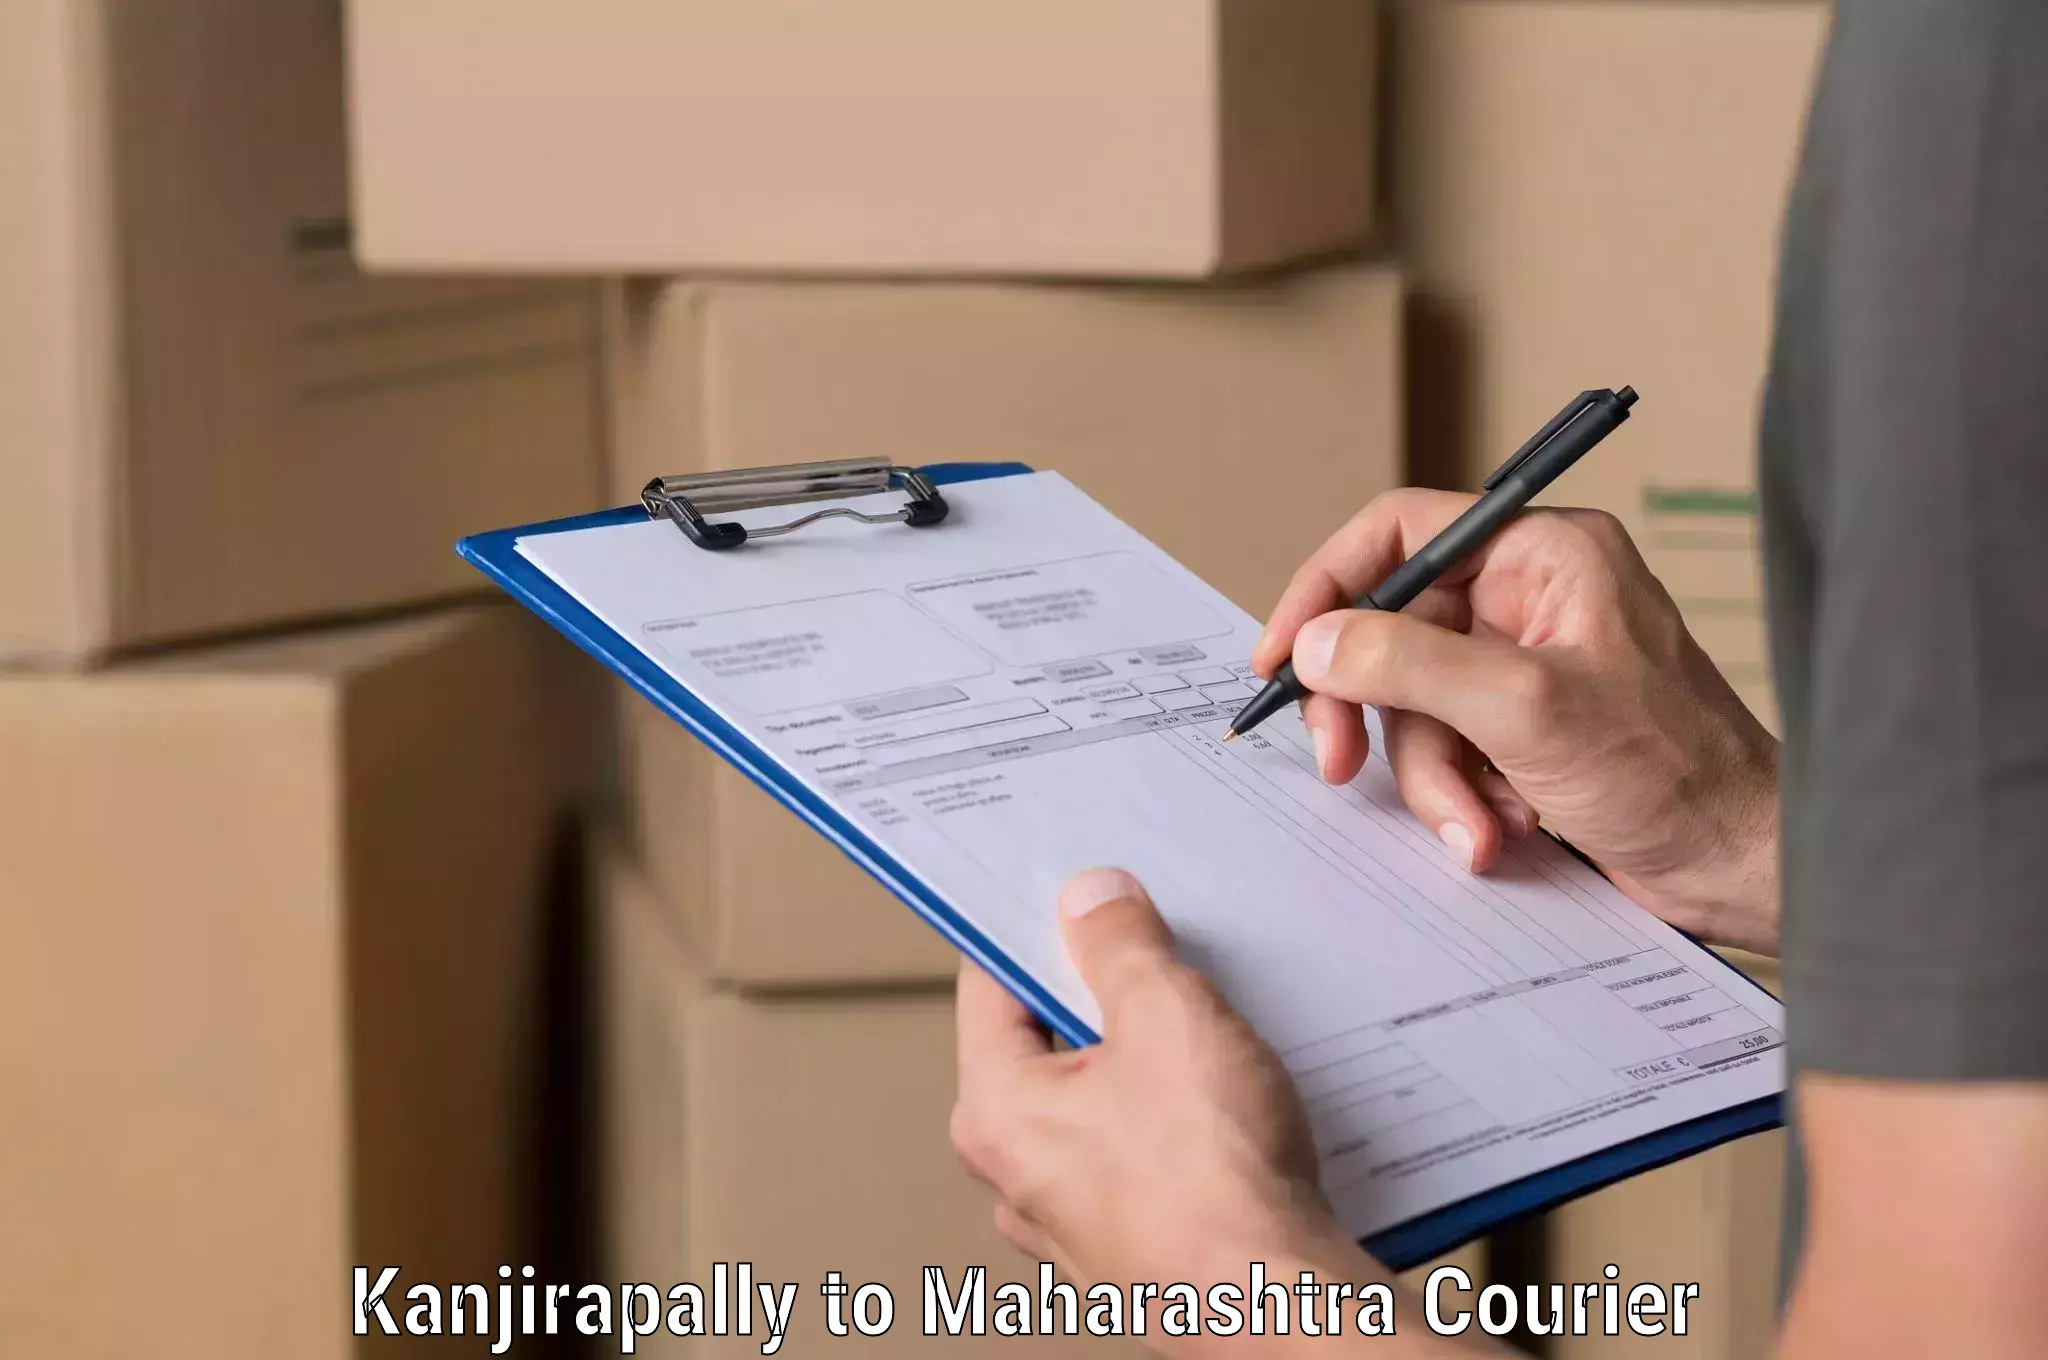 Optimized delivery routes in Kanjirapally to Maharashtra